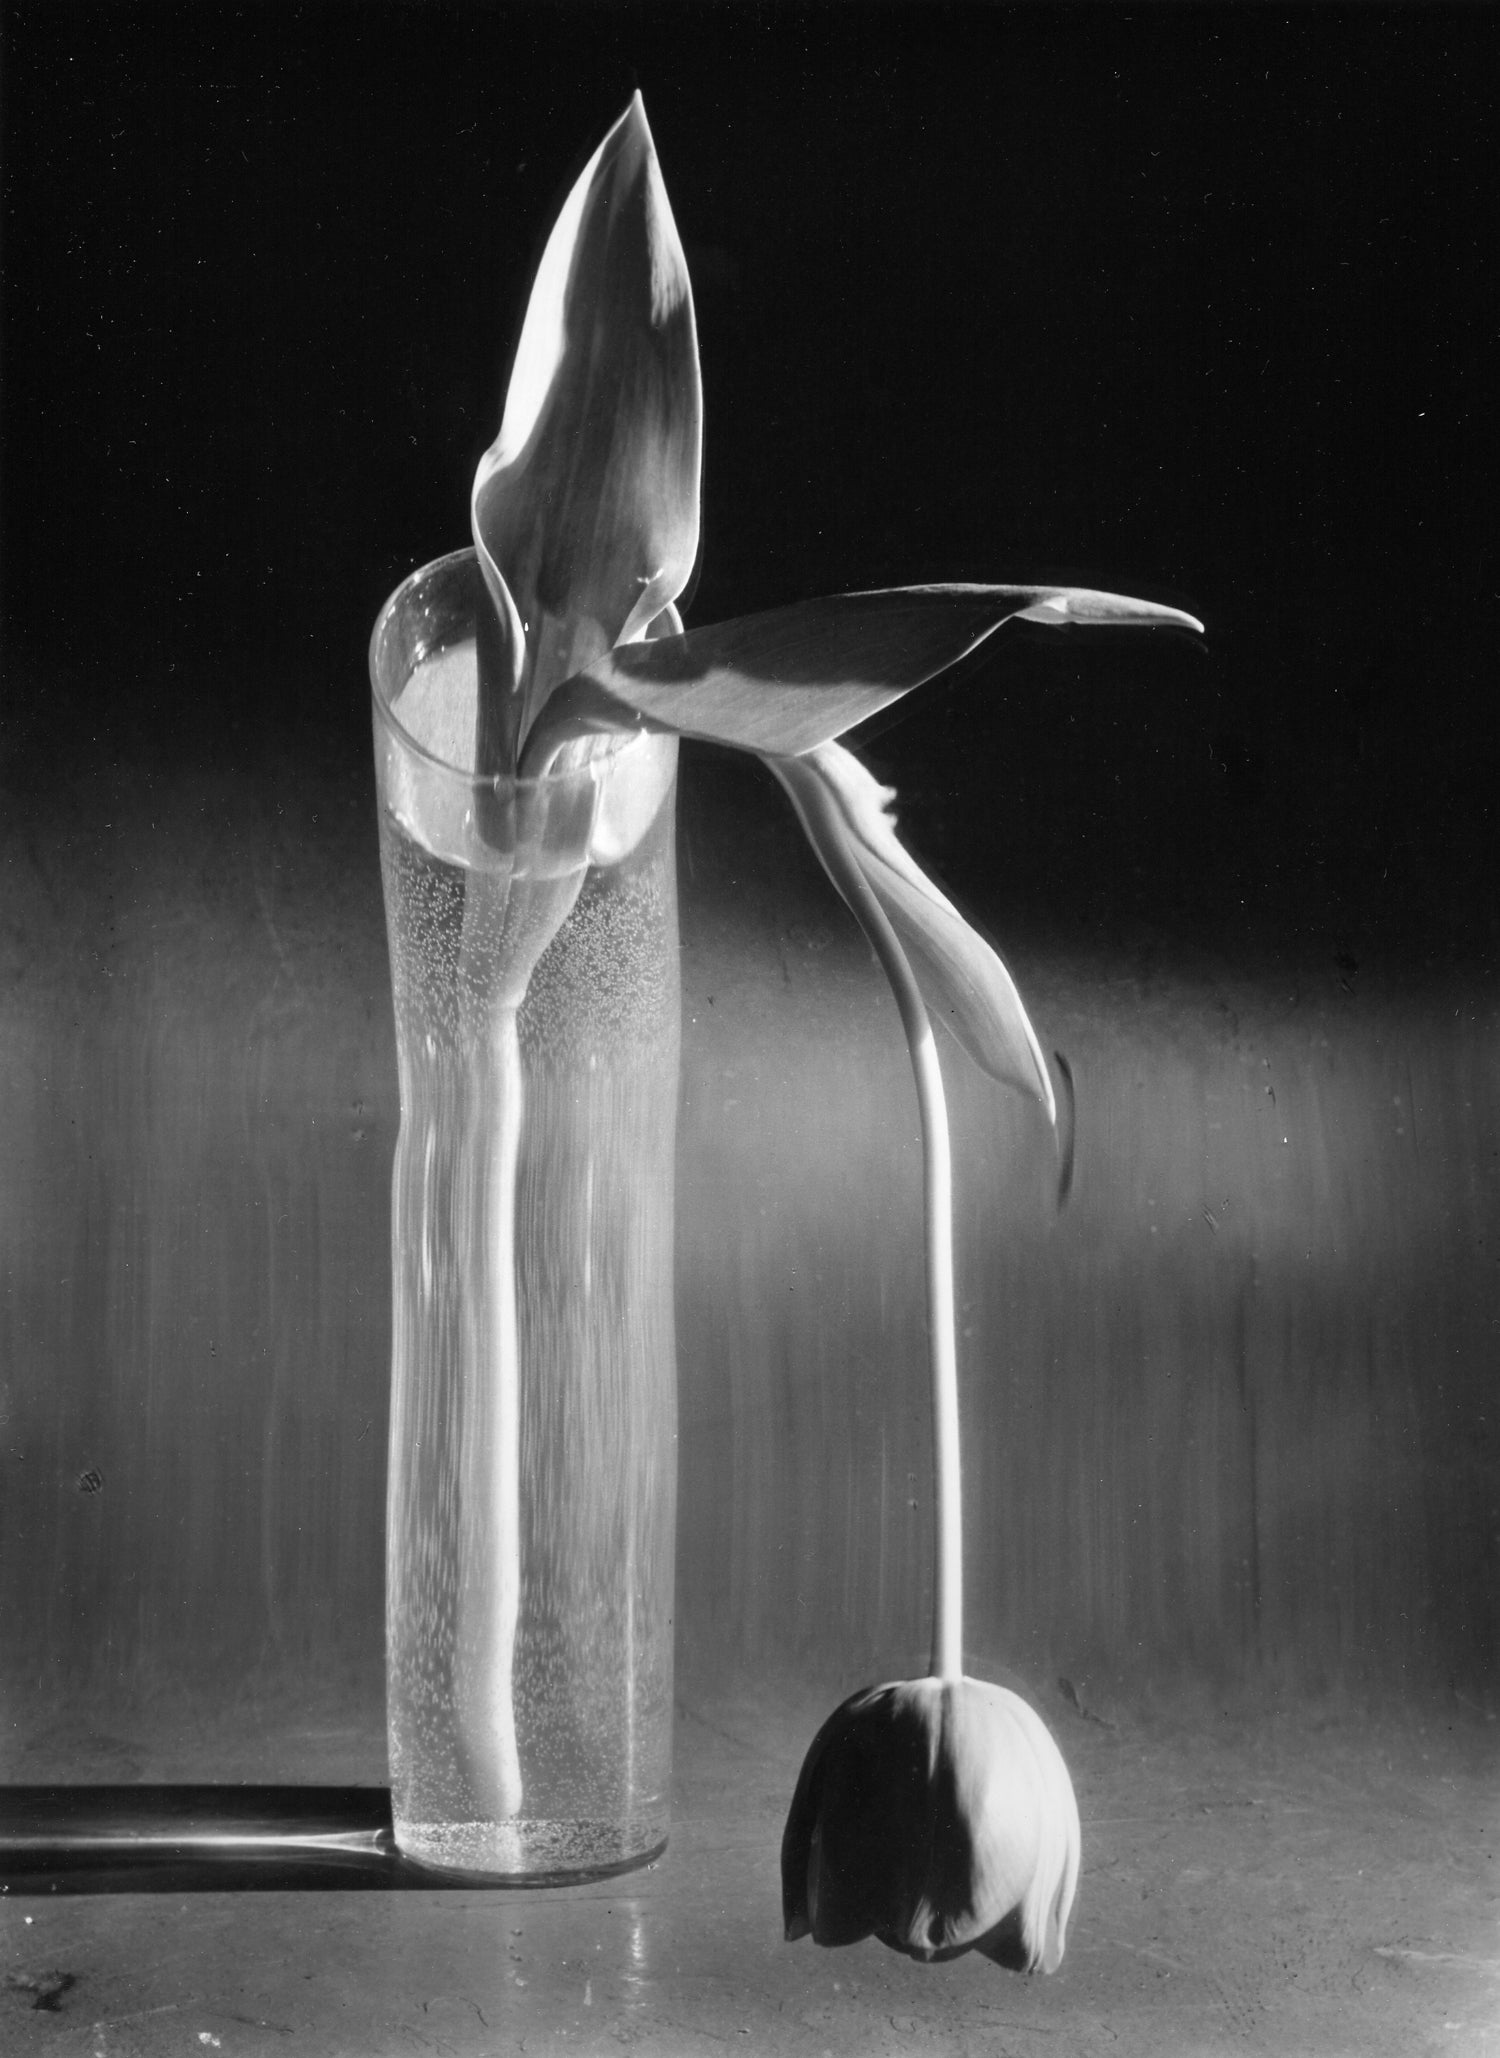 Parallel Spotlight: André Kertész, A Pioneer of Modern Photography